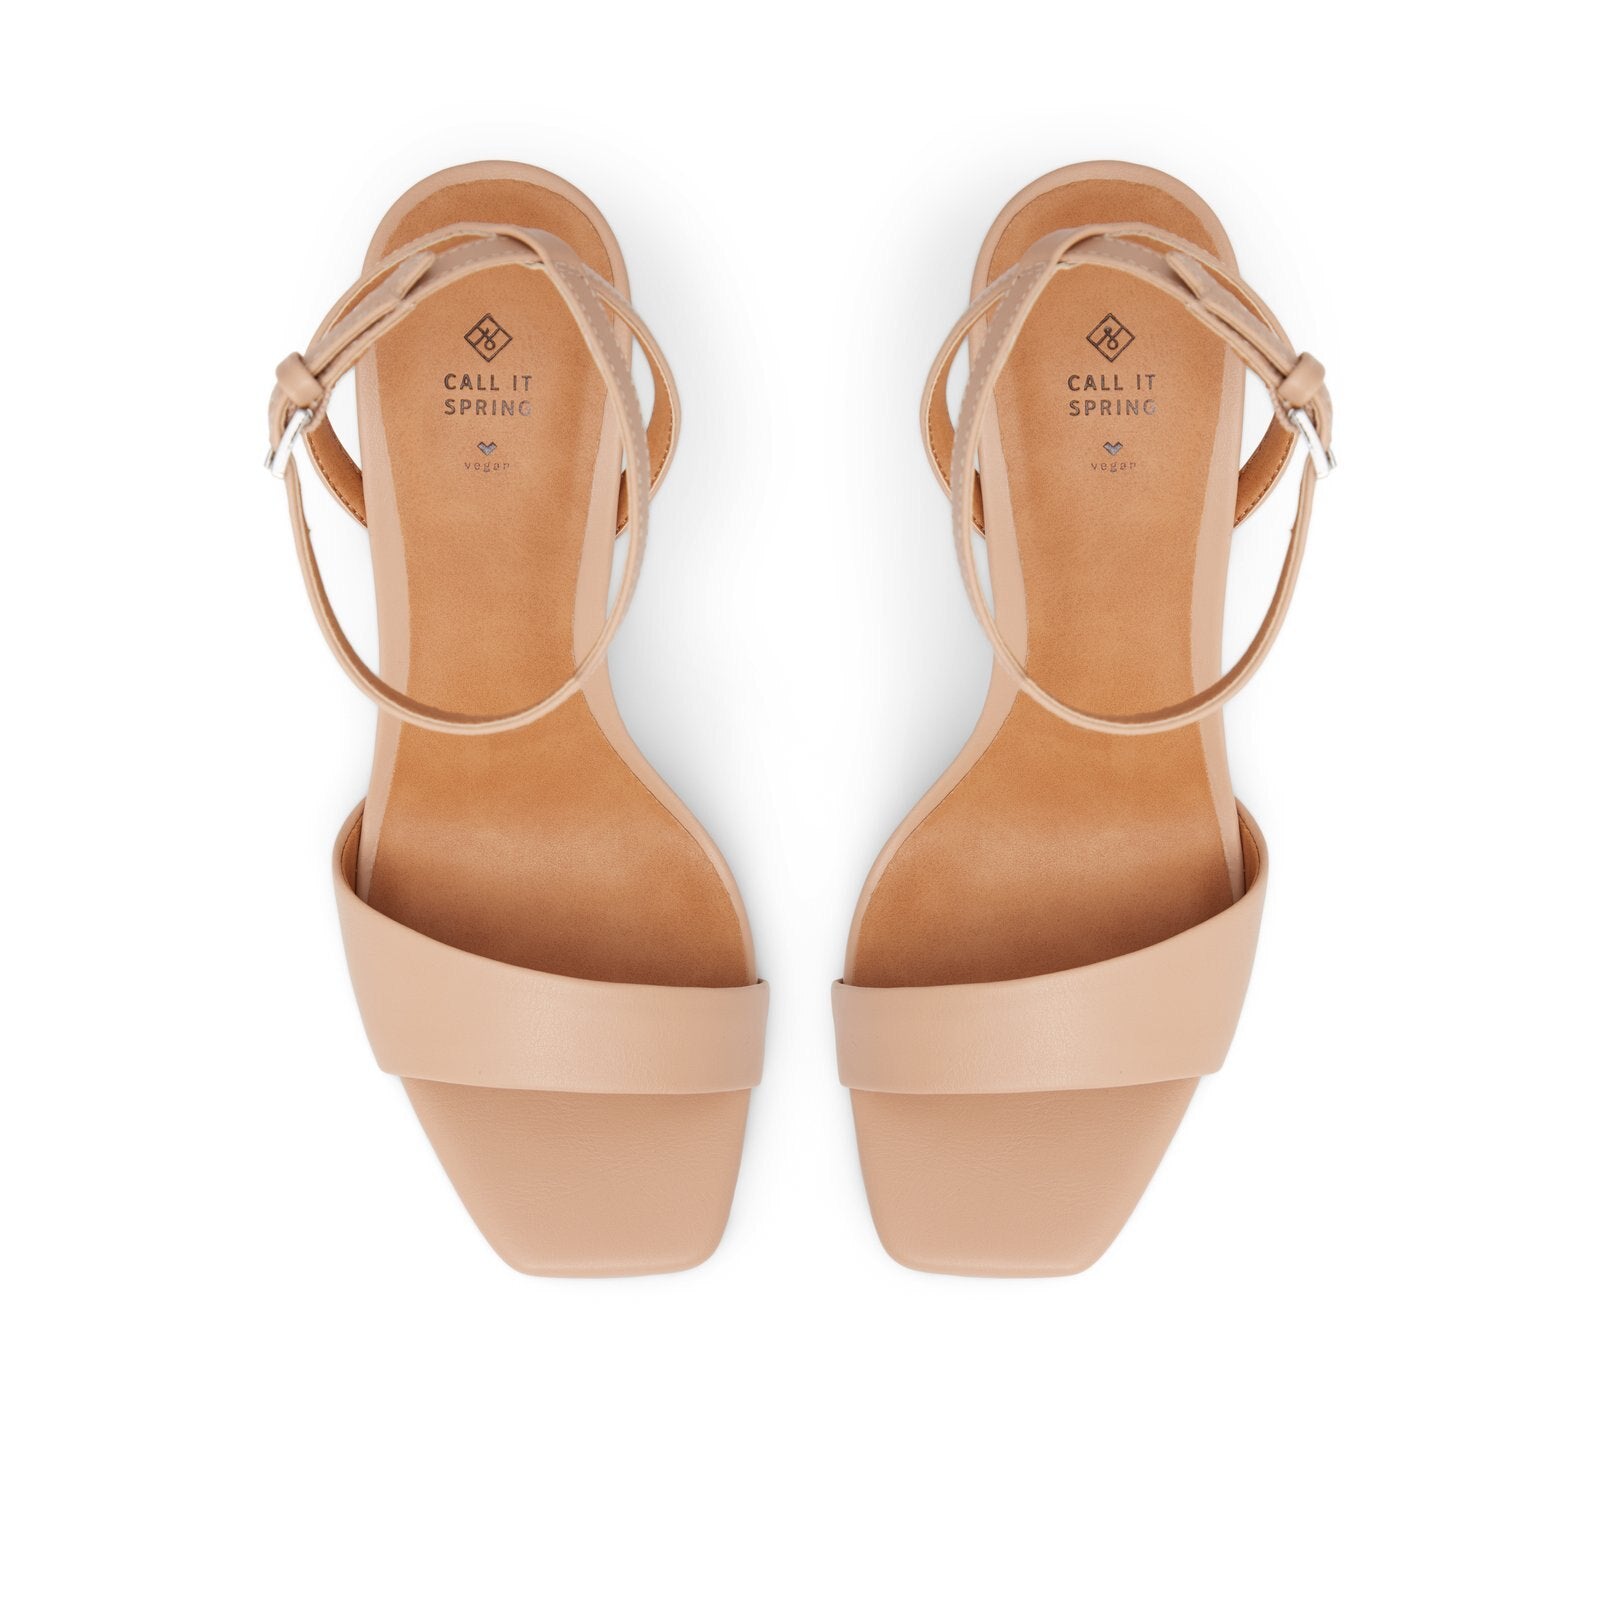 Calista Women Shoes - Dark Beige - CALL IT SPRING KSA